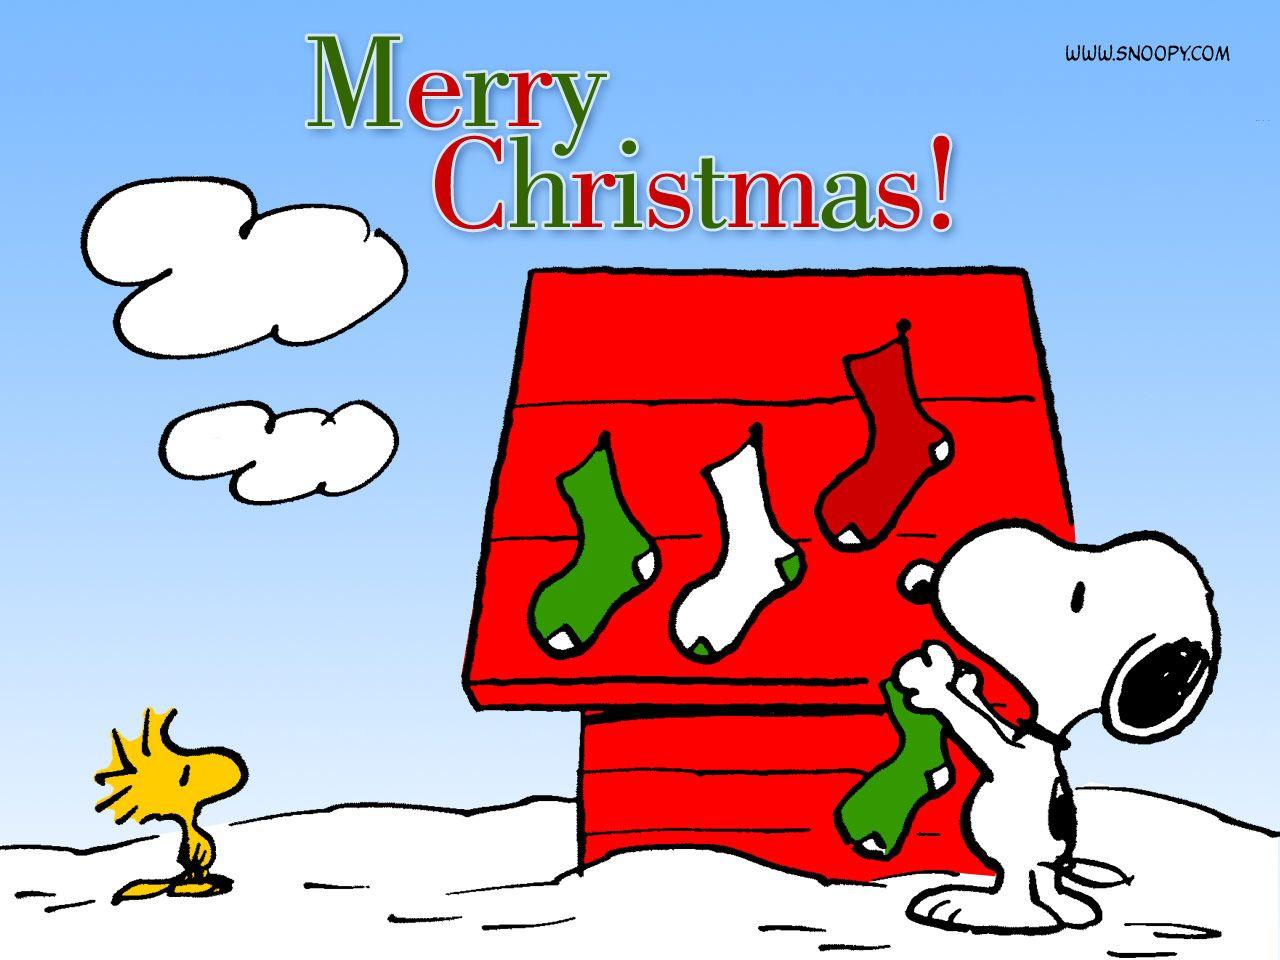 Snoopy Christmas Peanuts Cartoon Full HD Image Wallpaper for iPad